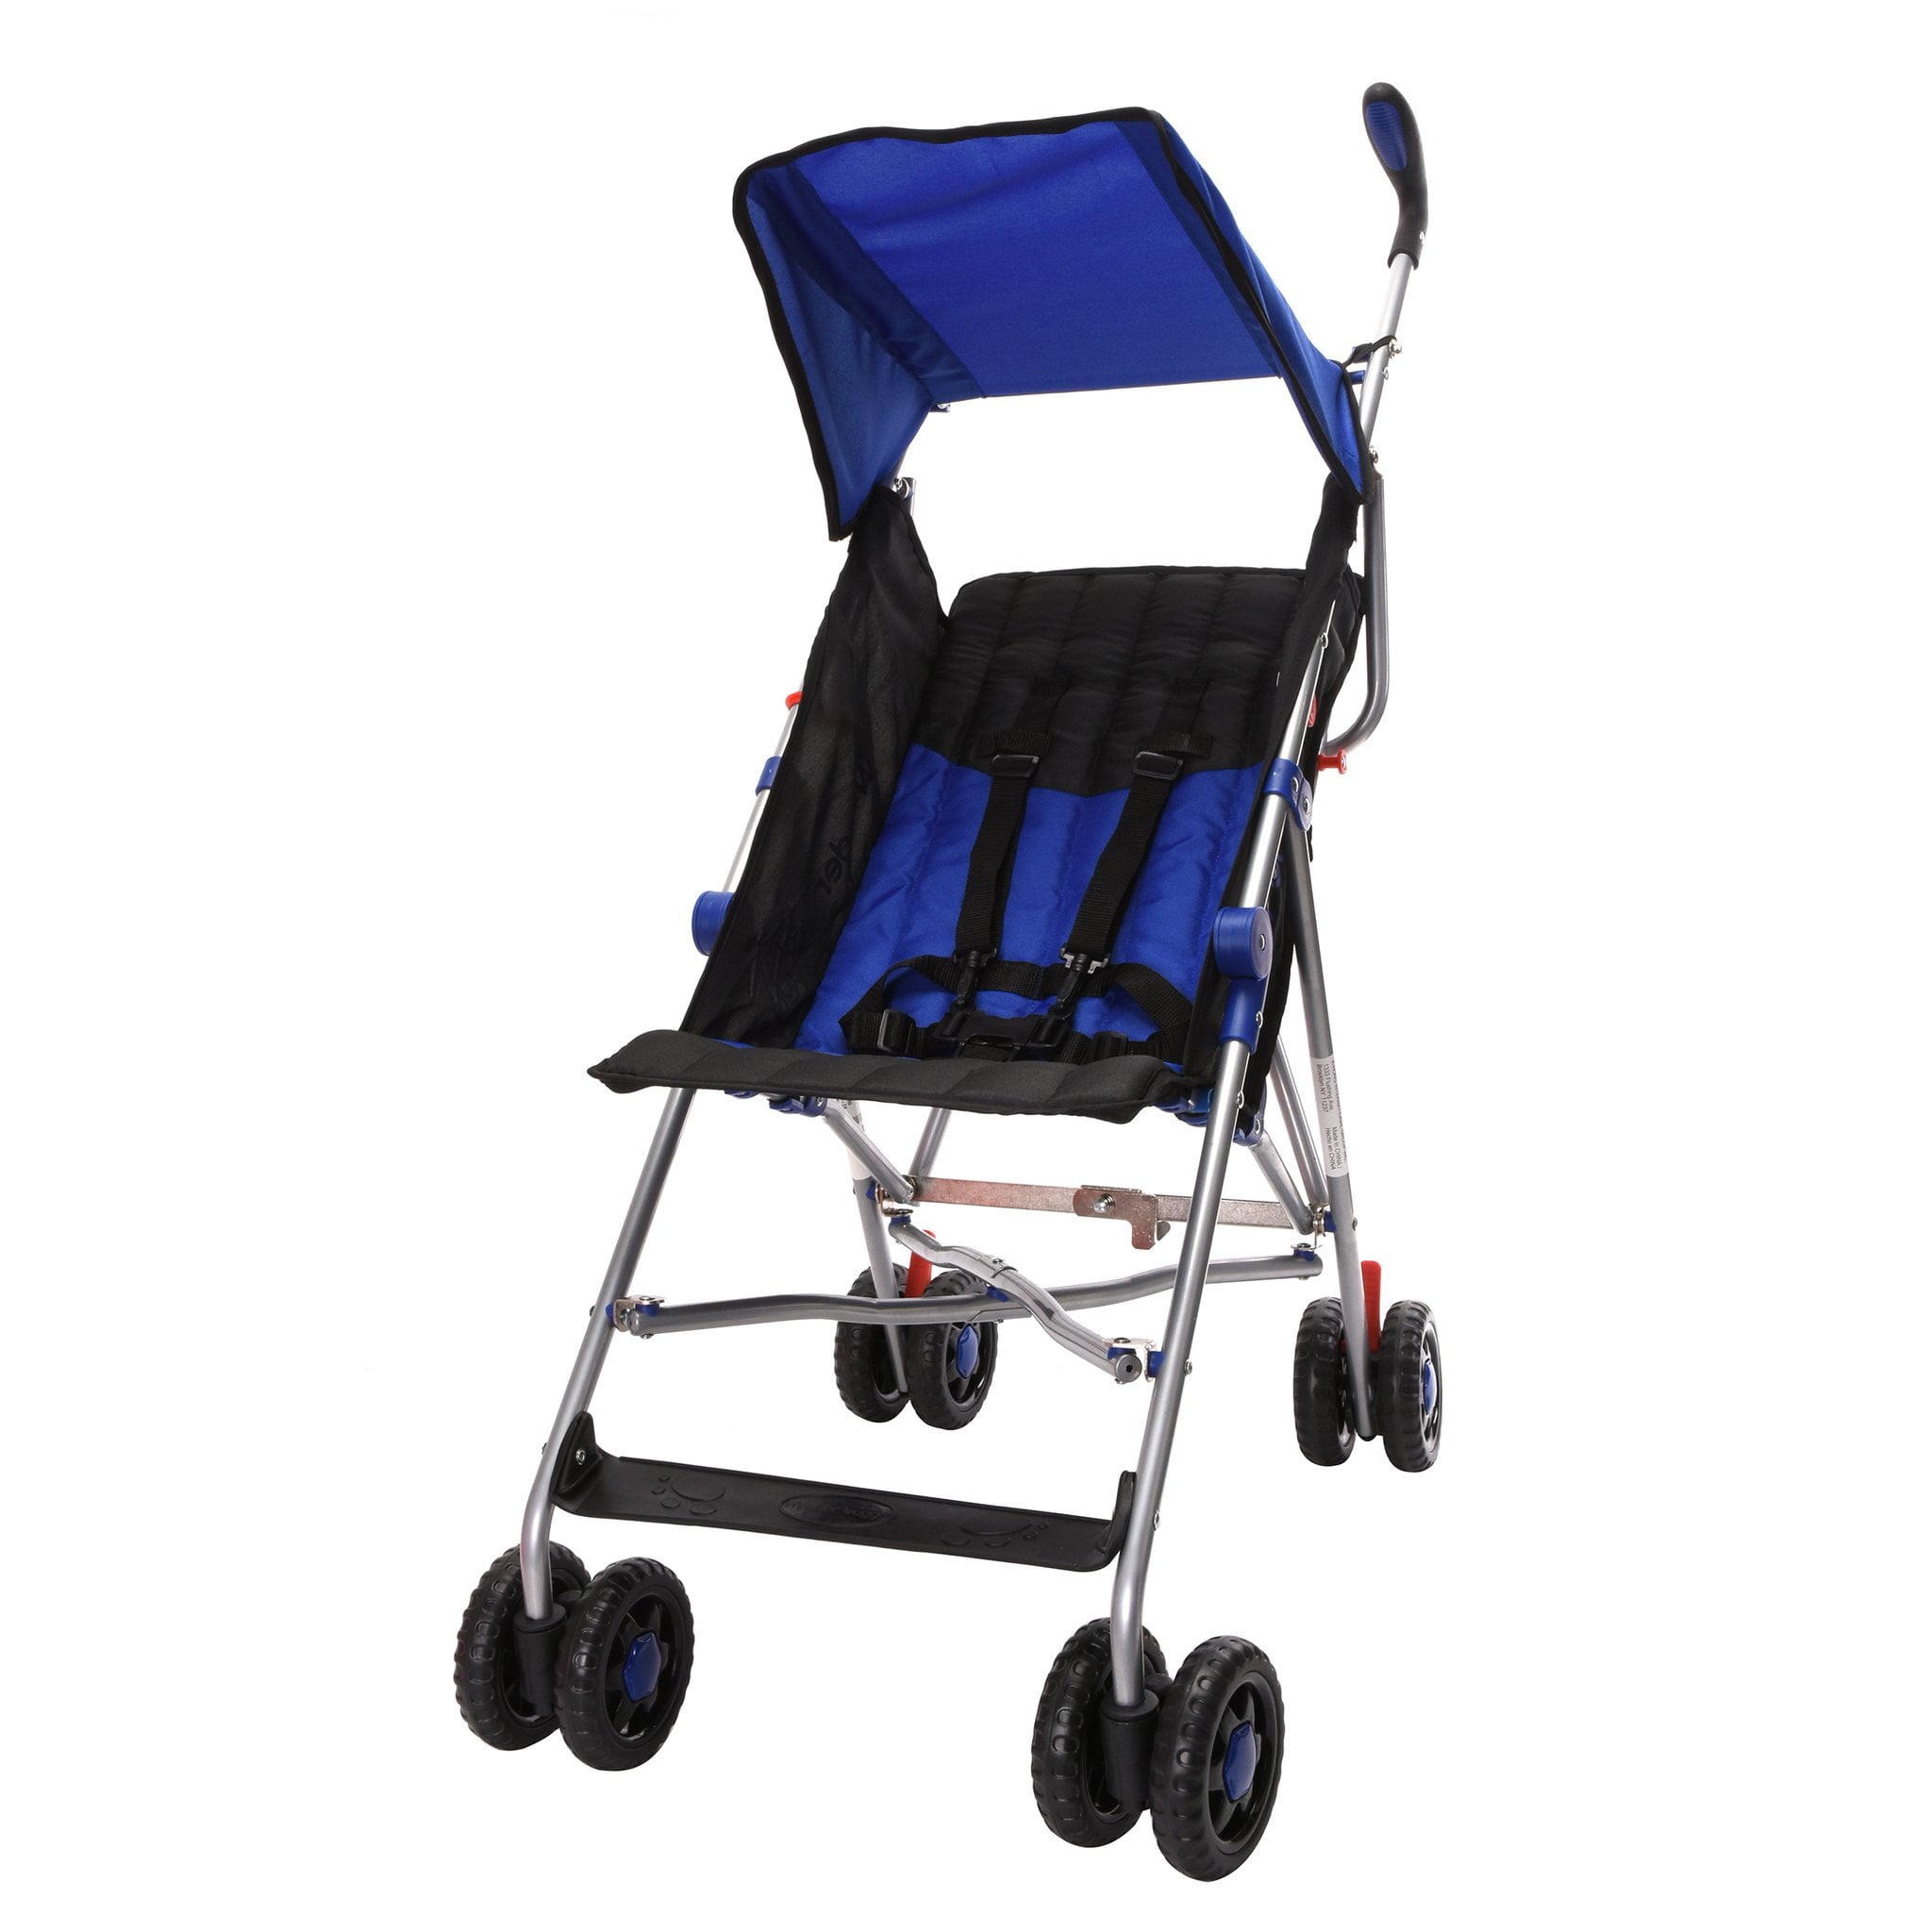 used pram strollers for sale